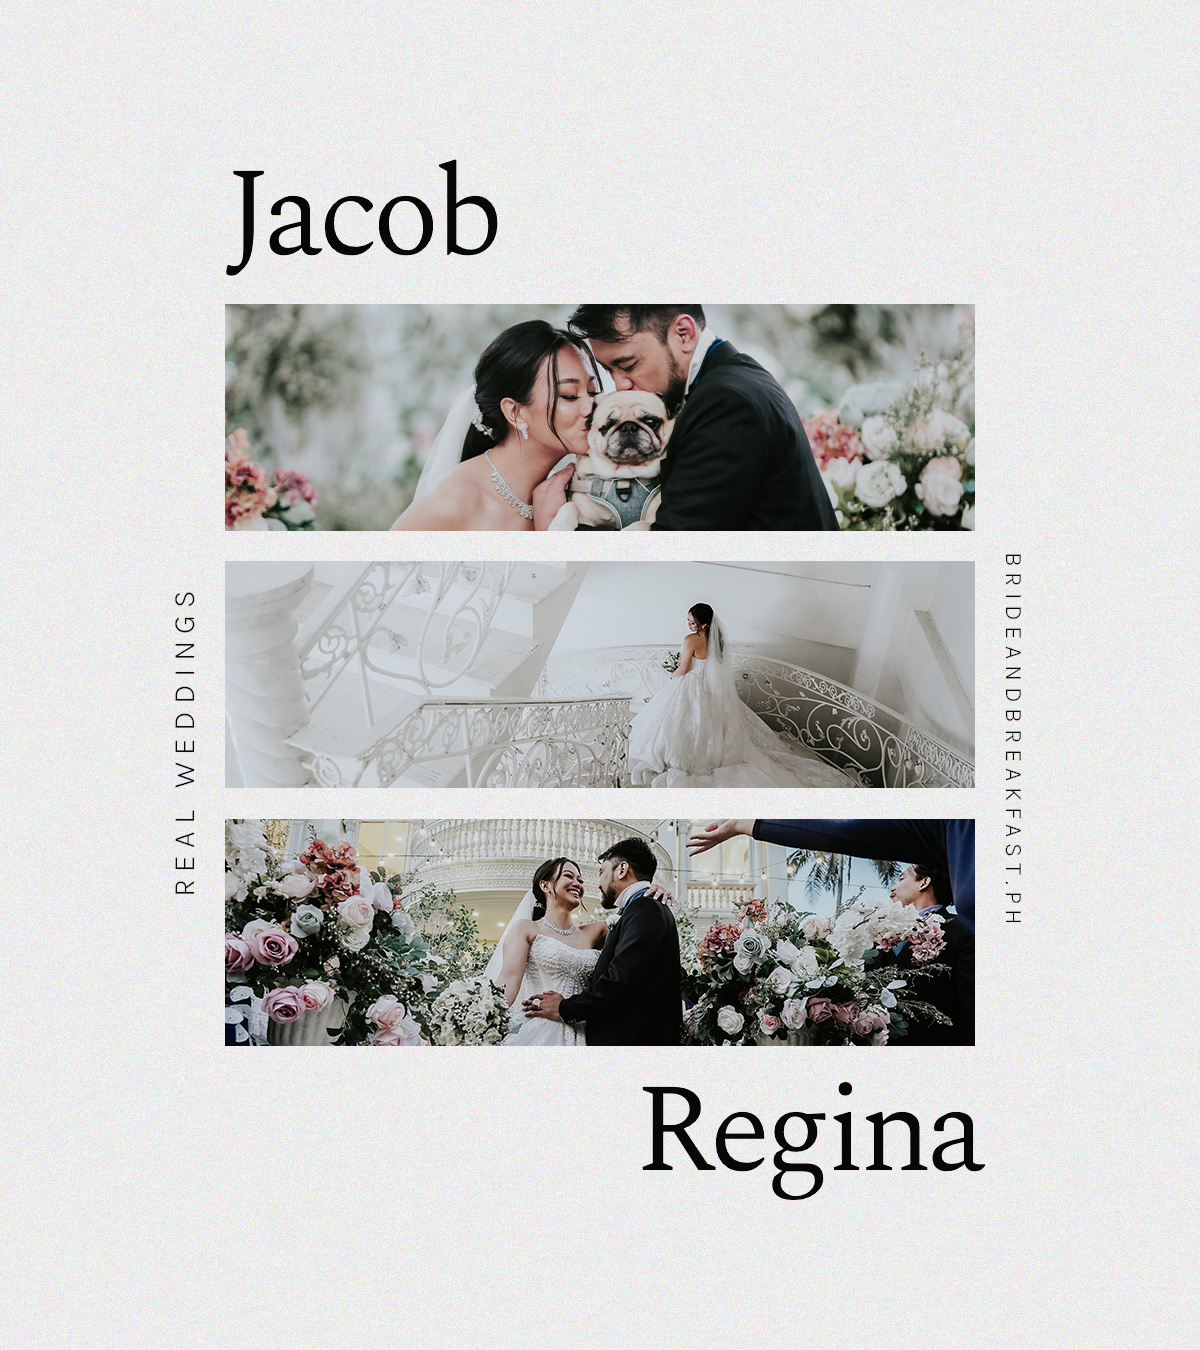 Jacob and Regina